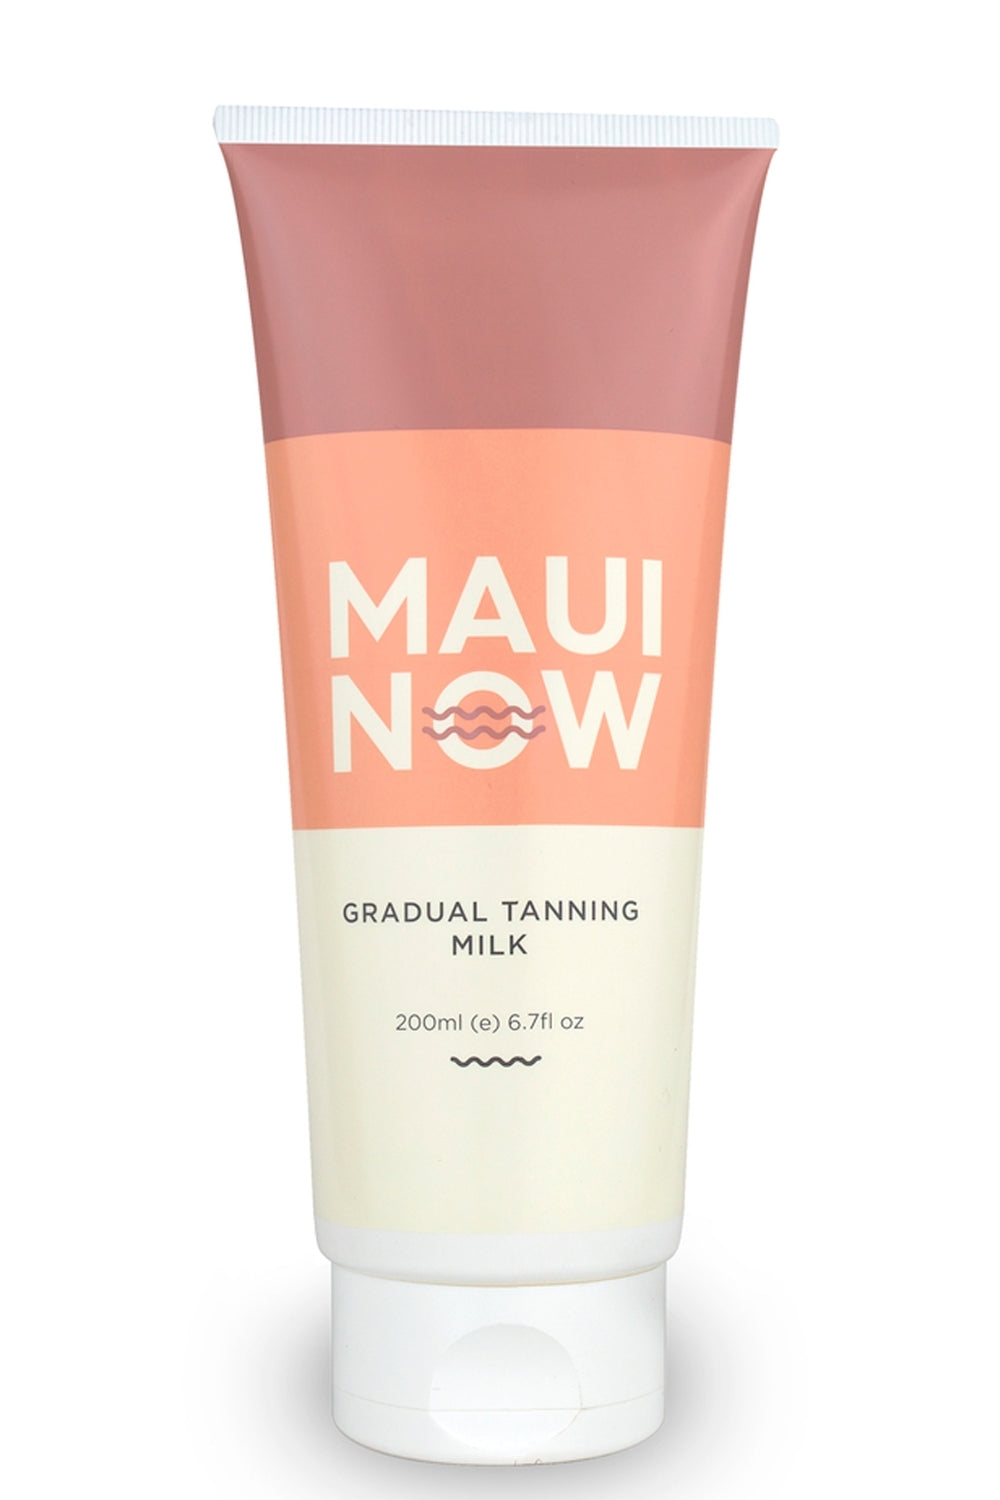 Maui Now Gradual Tanning Milk